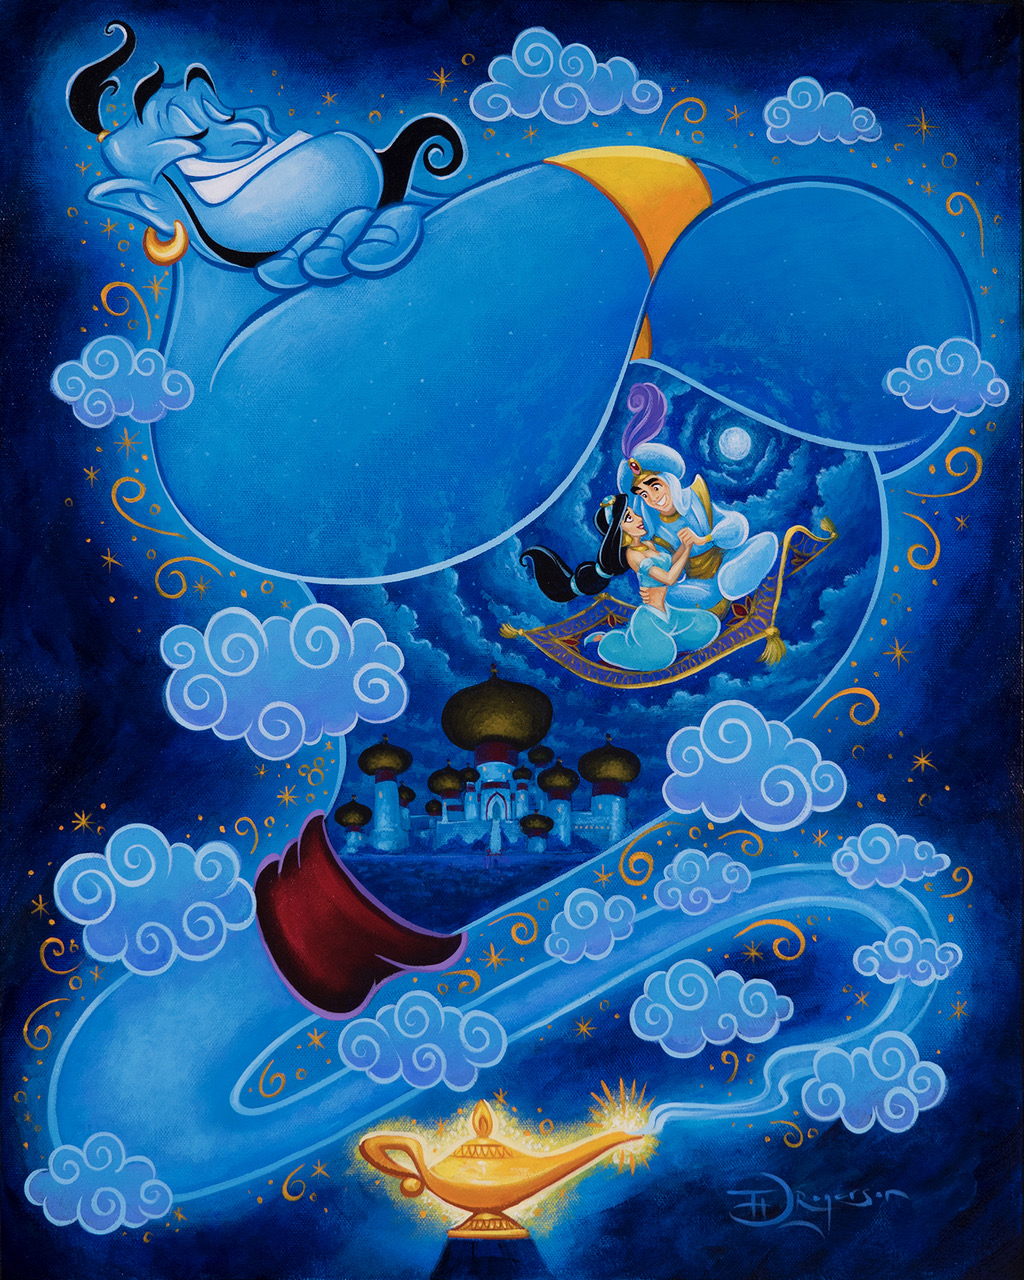 I Dream of Genie by Tim Rogerson